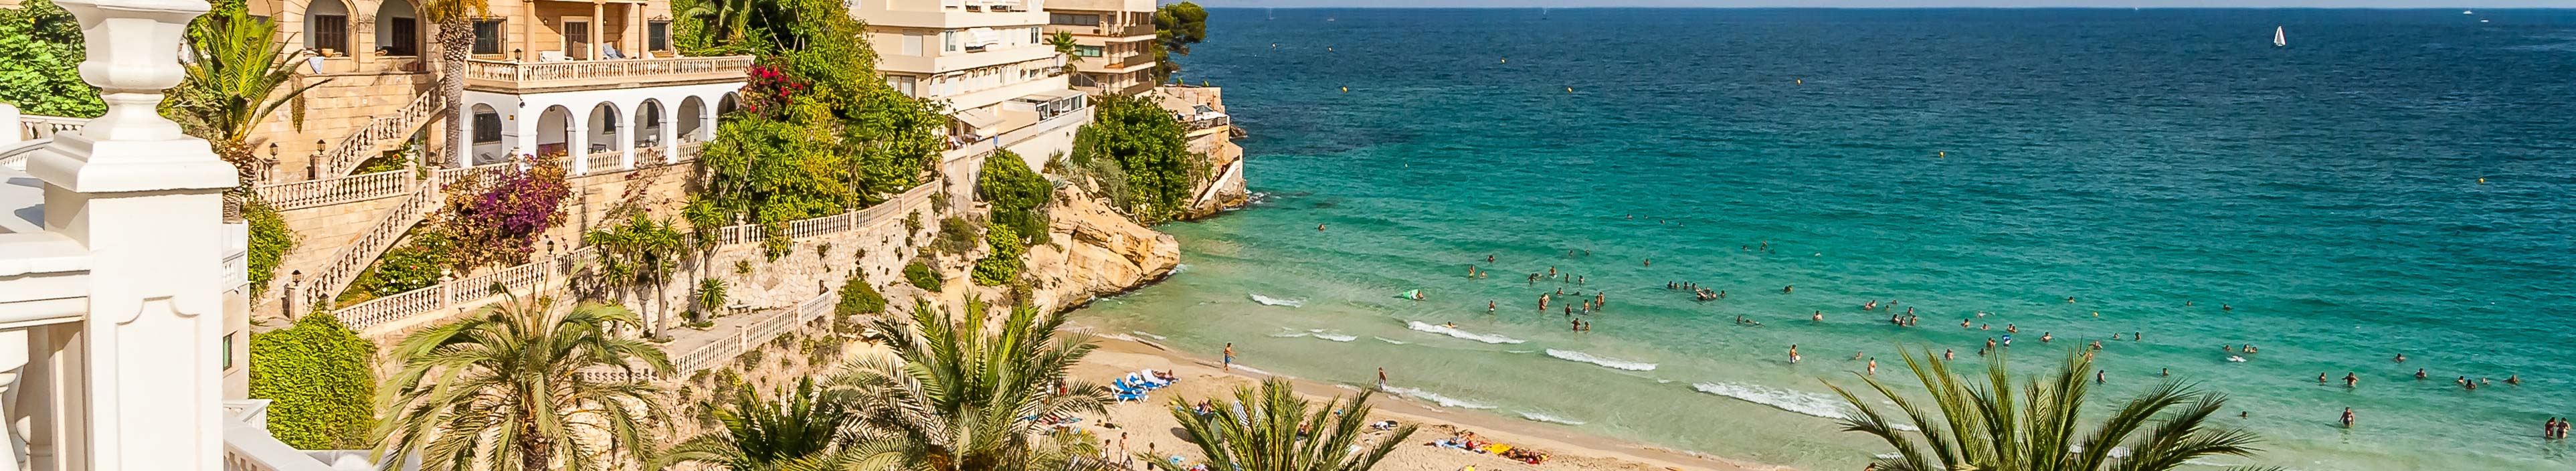 Strand auf Mallorca mit Blick auf Hotels